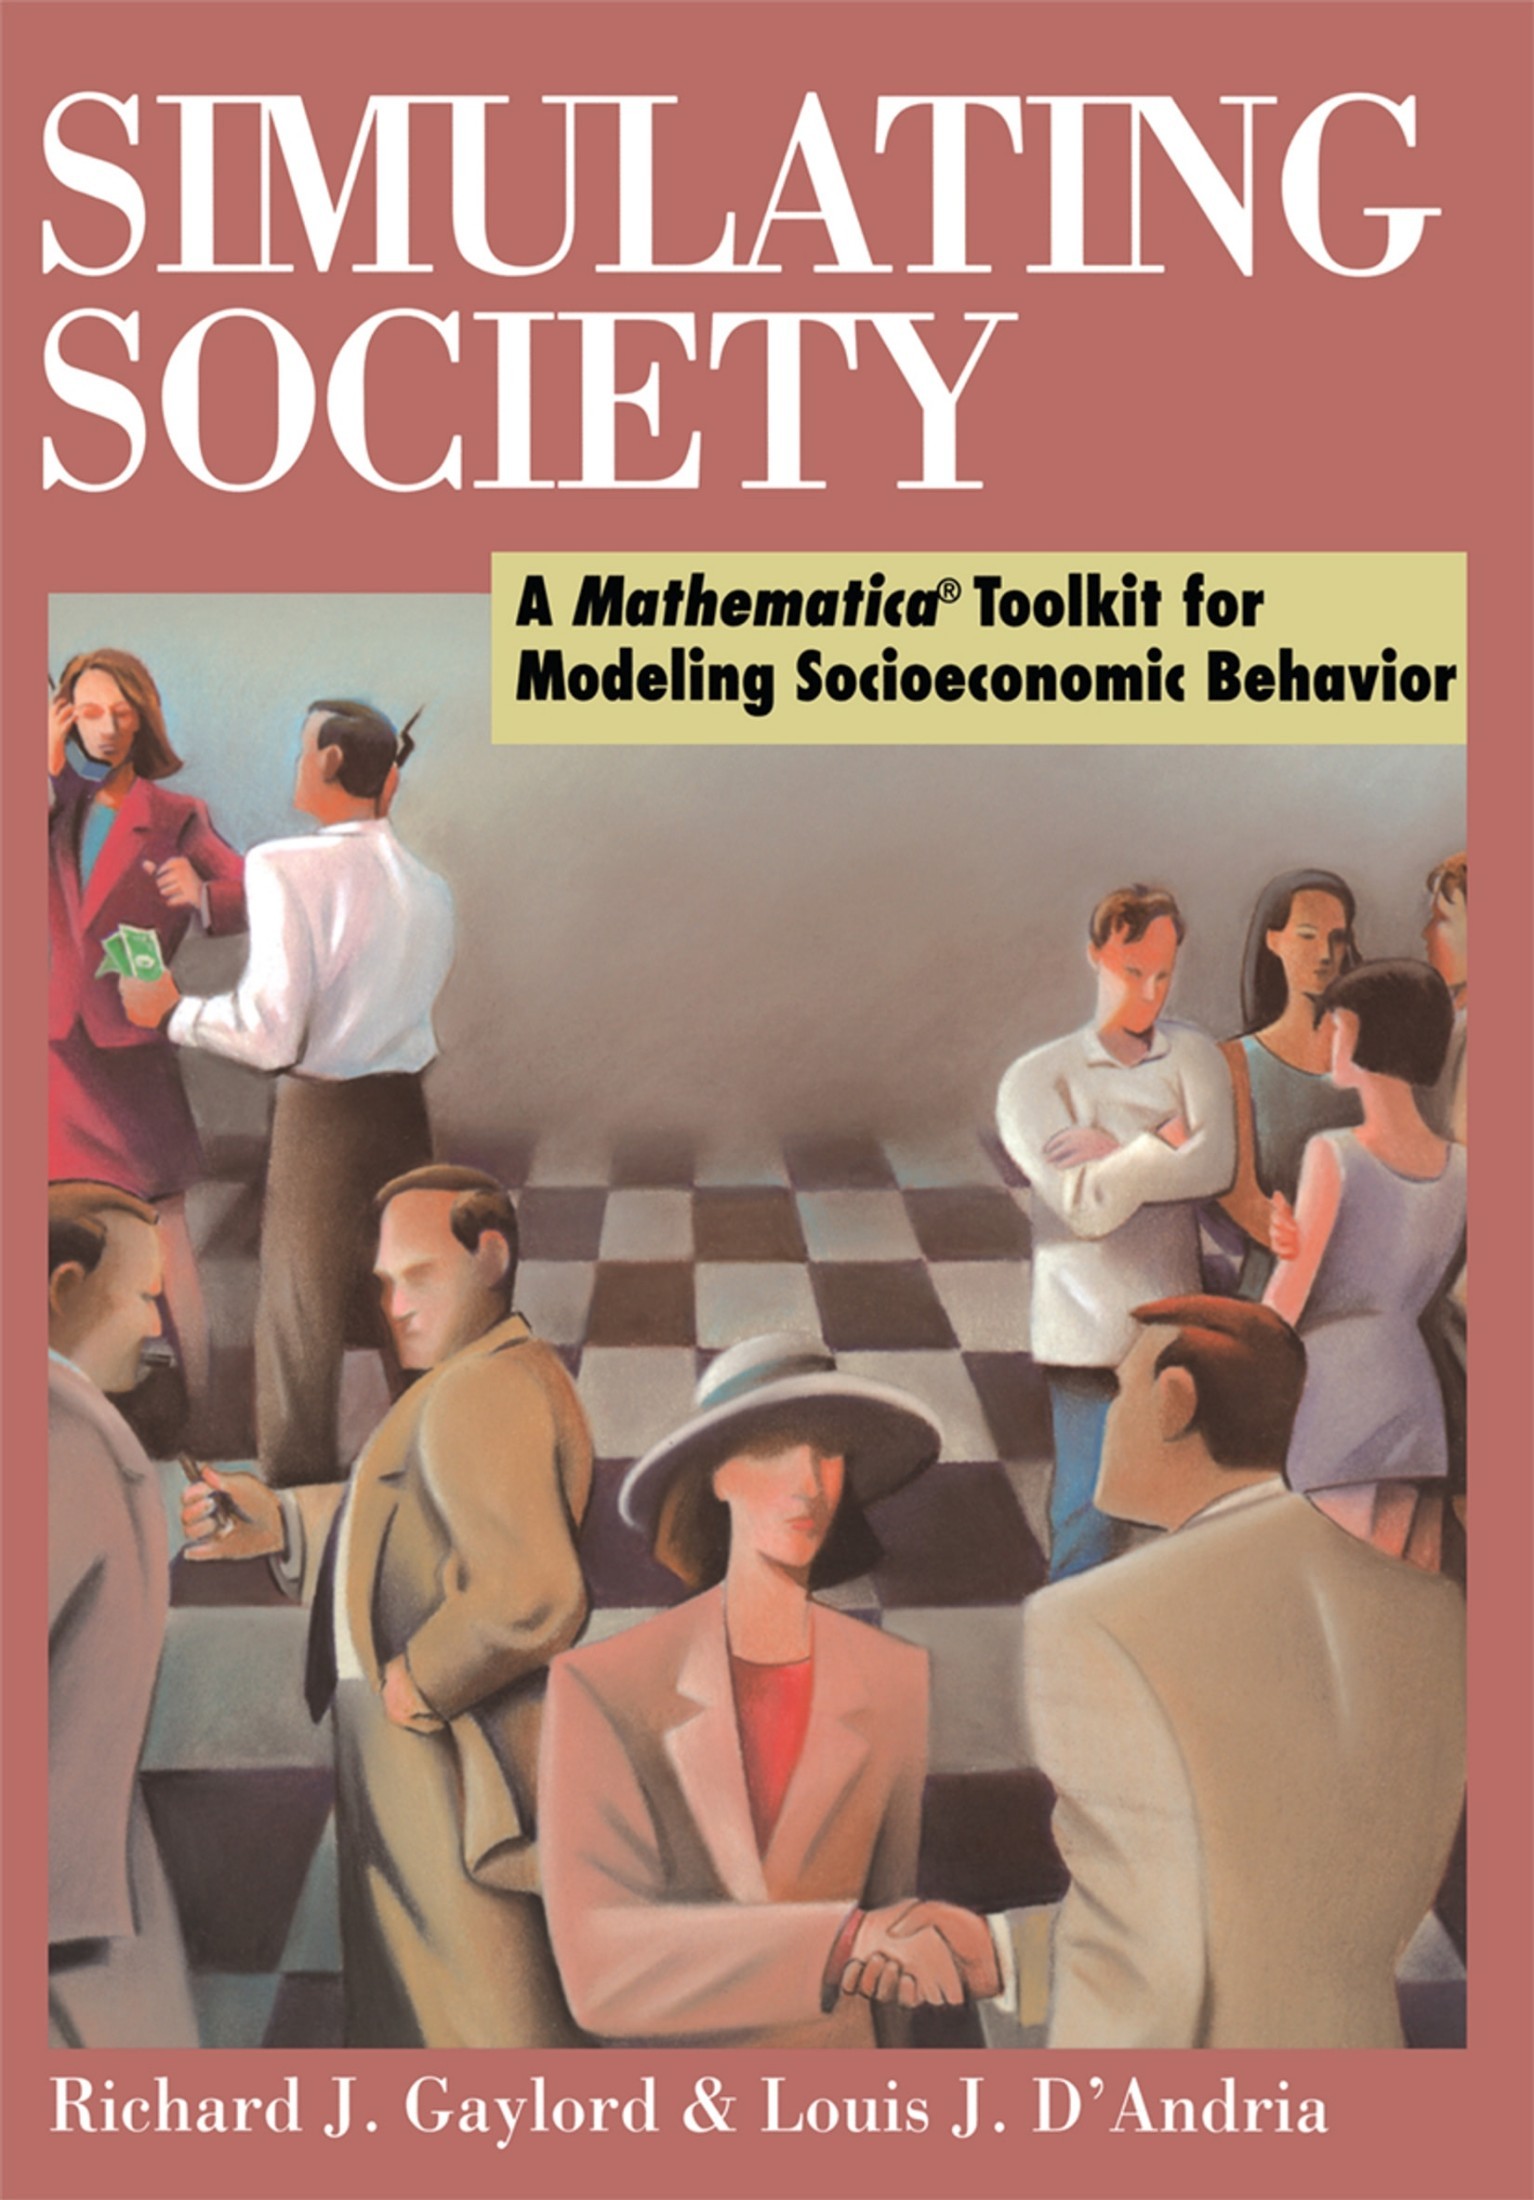 Simulating Society - A Mathematica® Toolkit for Modeling Socioeconomic Behavior